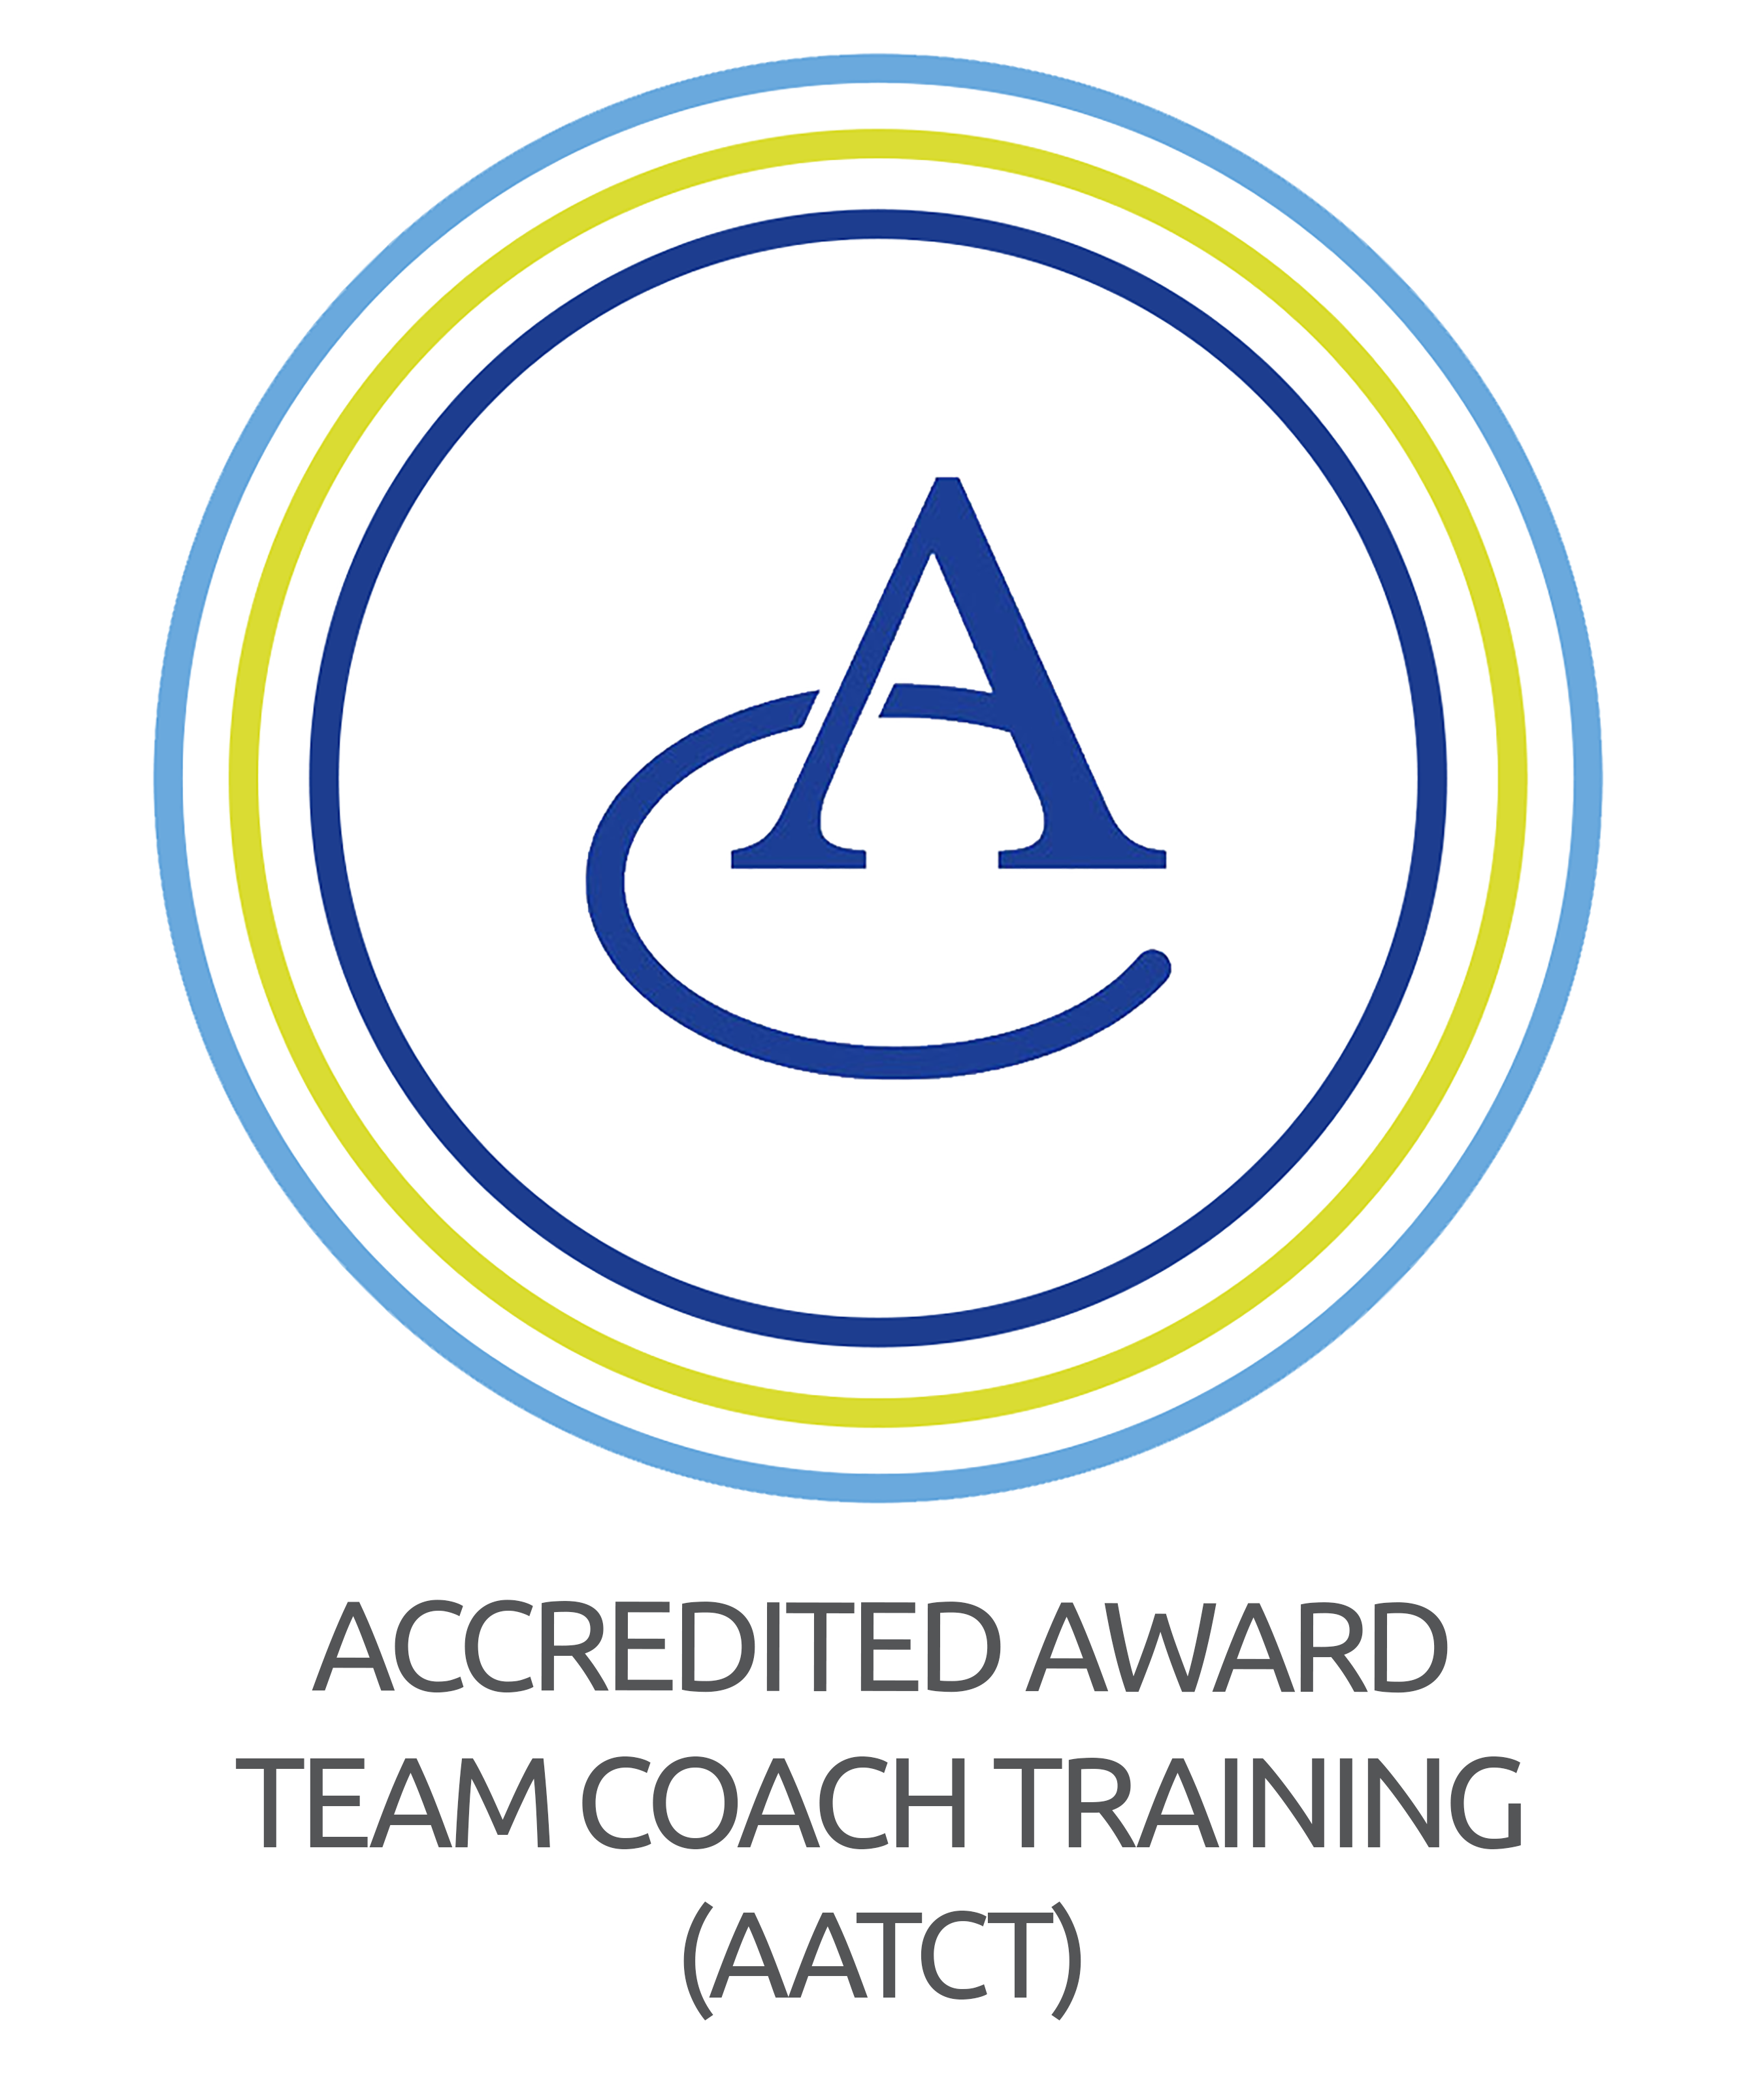 Accredited Award Team Coach Training